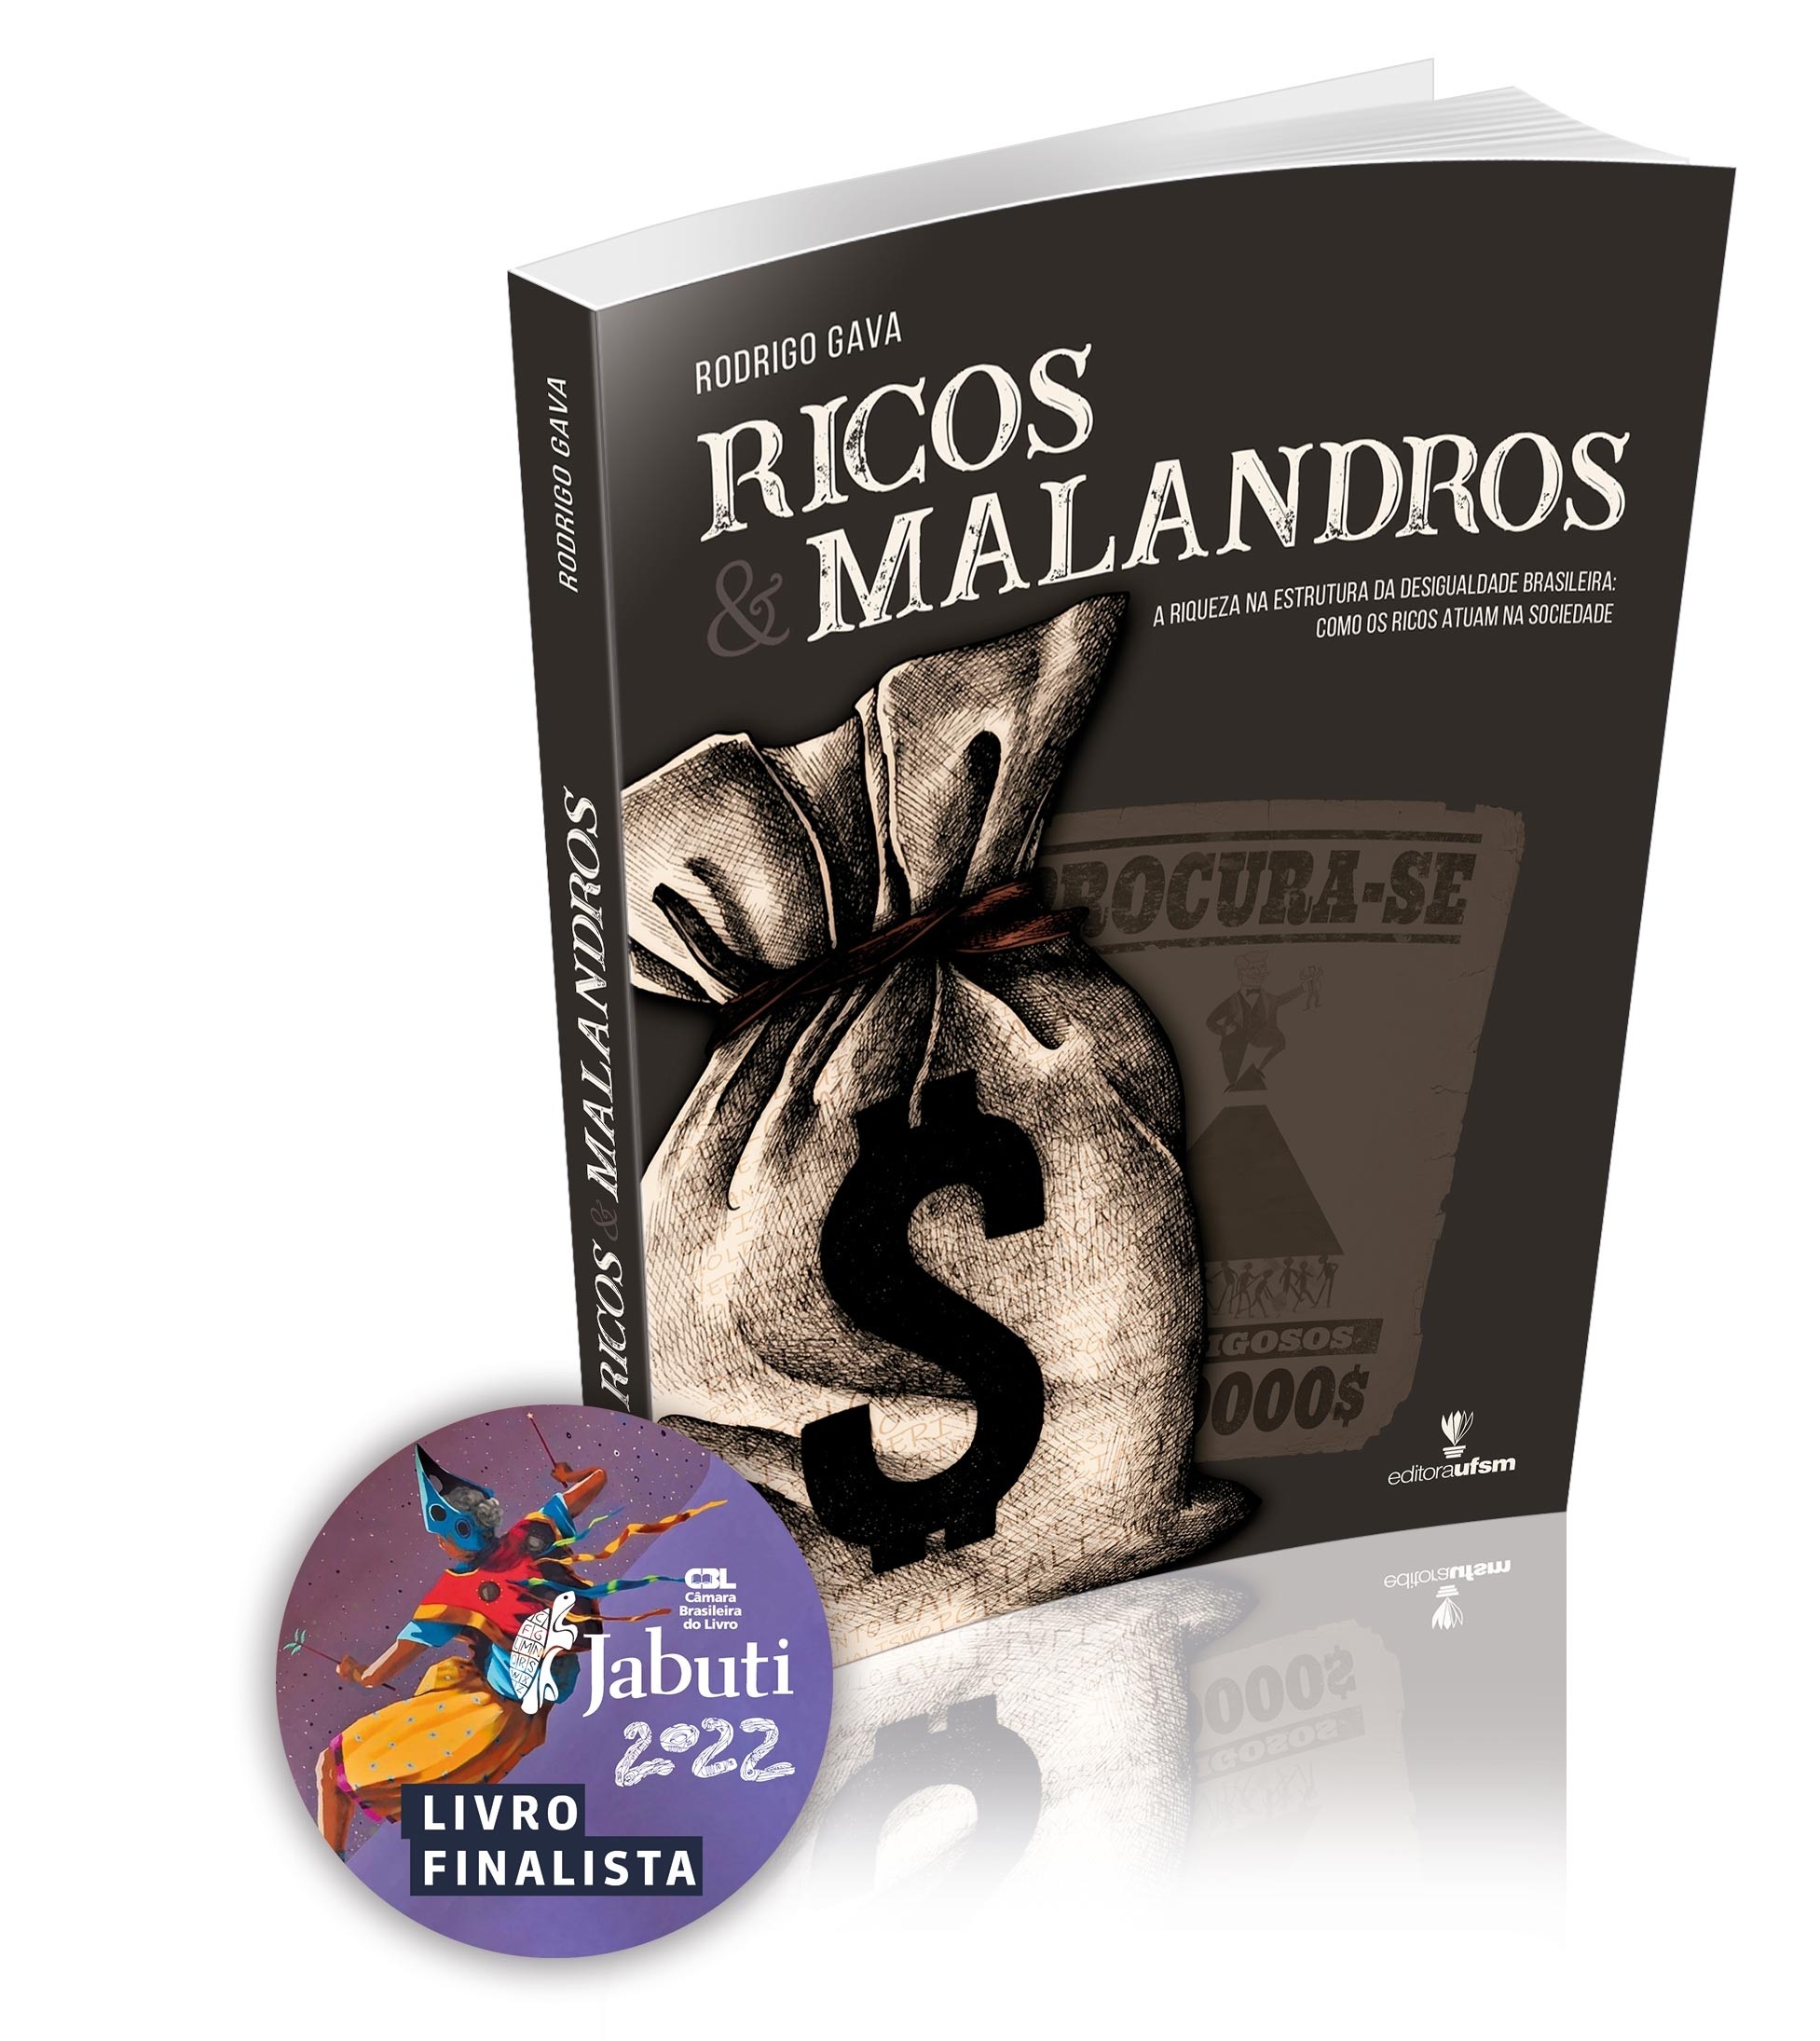 Capa do livro Ricos & Malandros - Finalista no Prêmio Jabuti